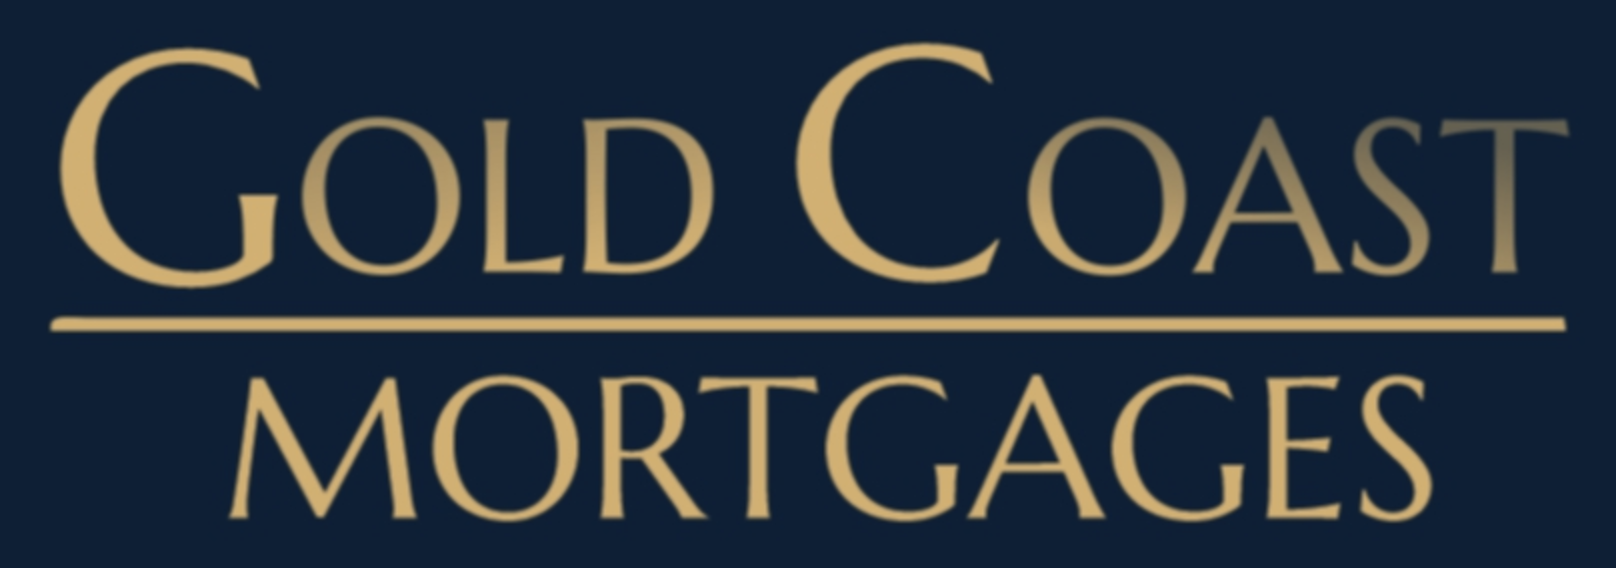 Gold Coast Mortgages, LLC